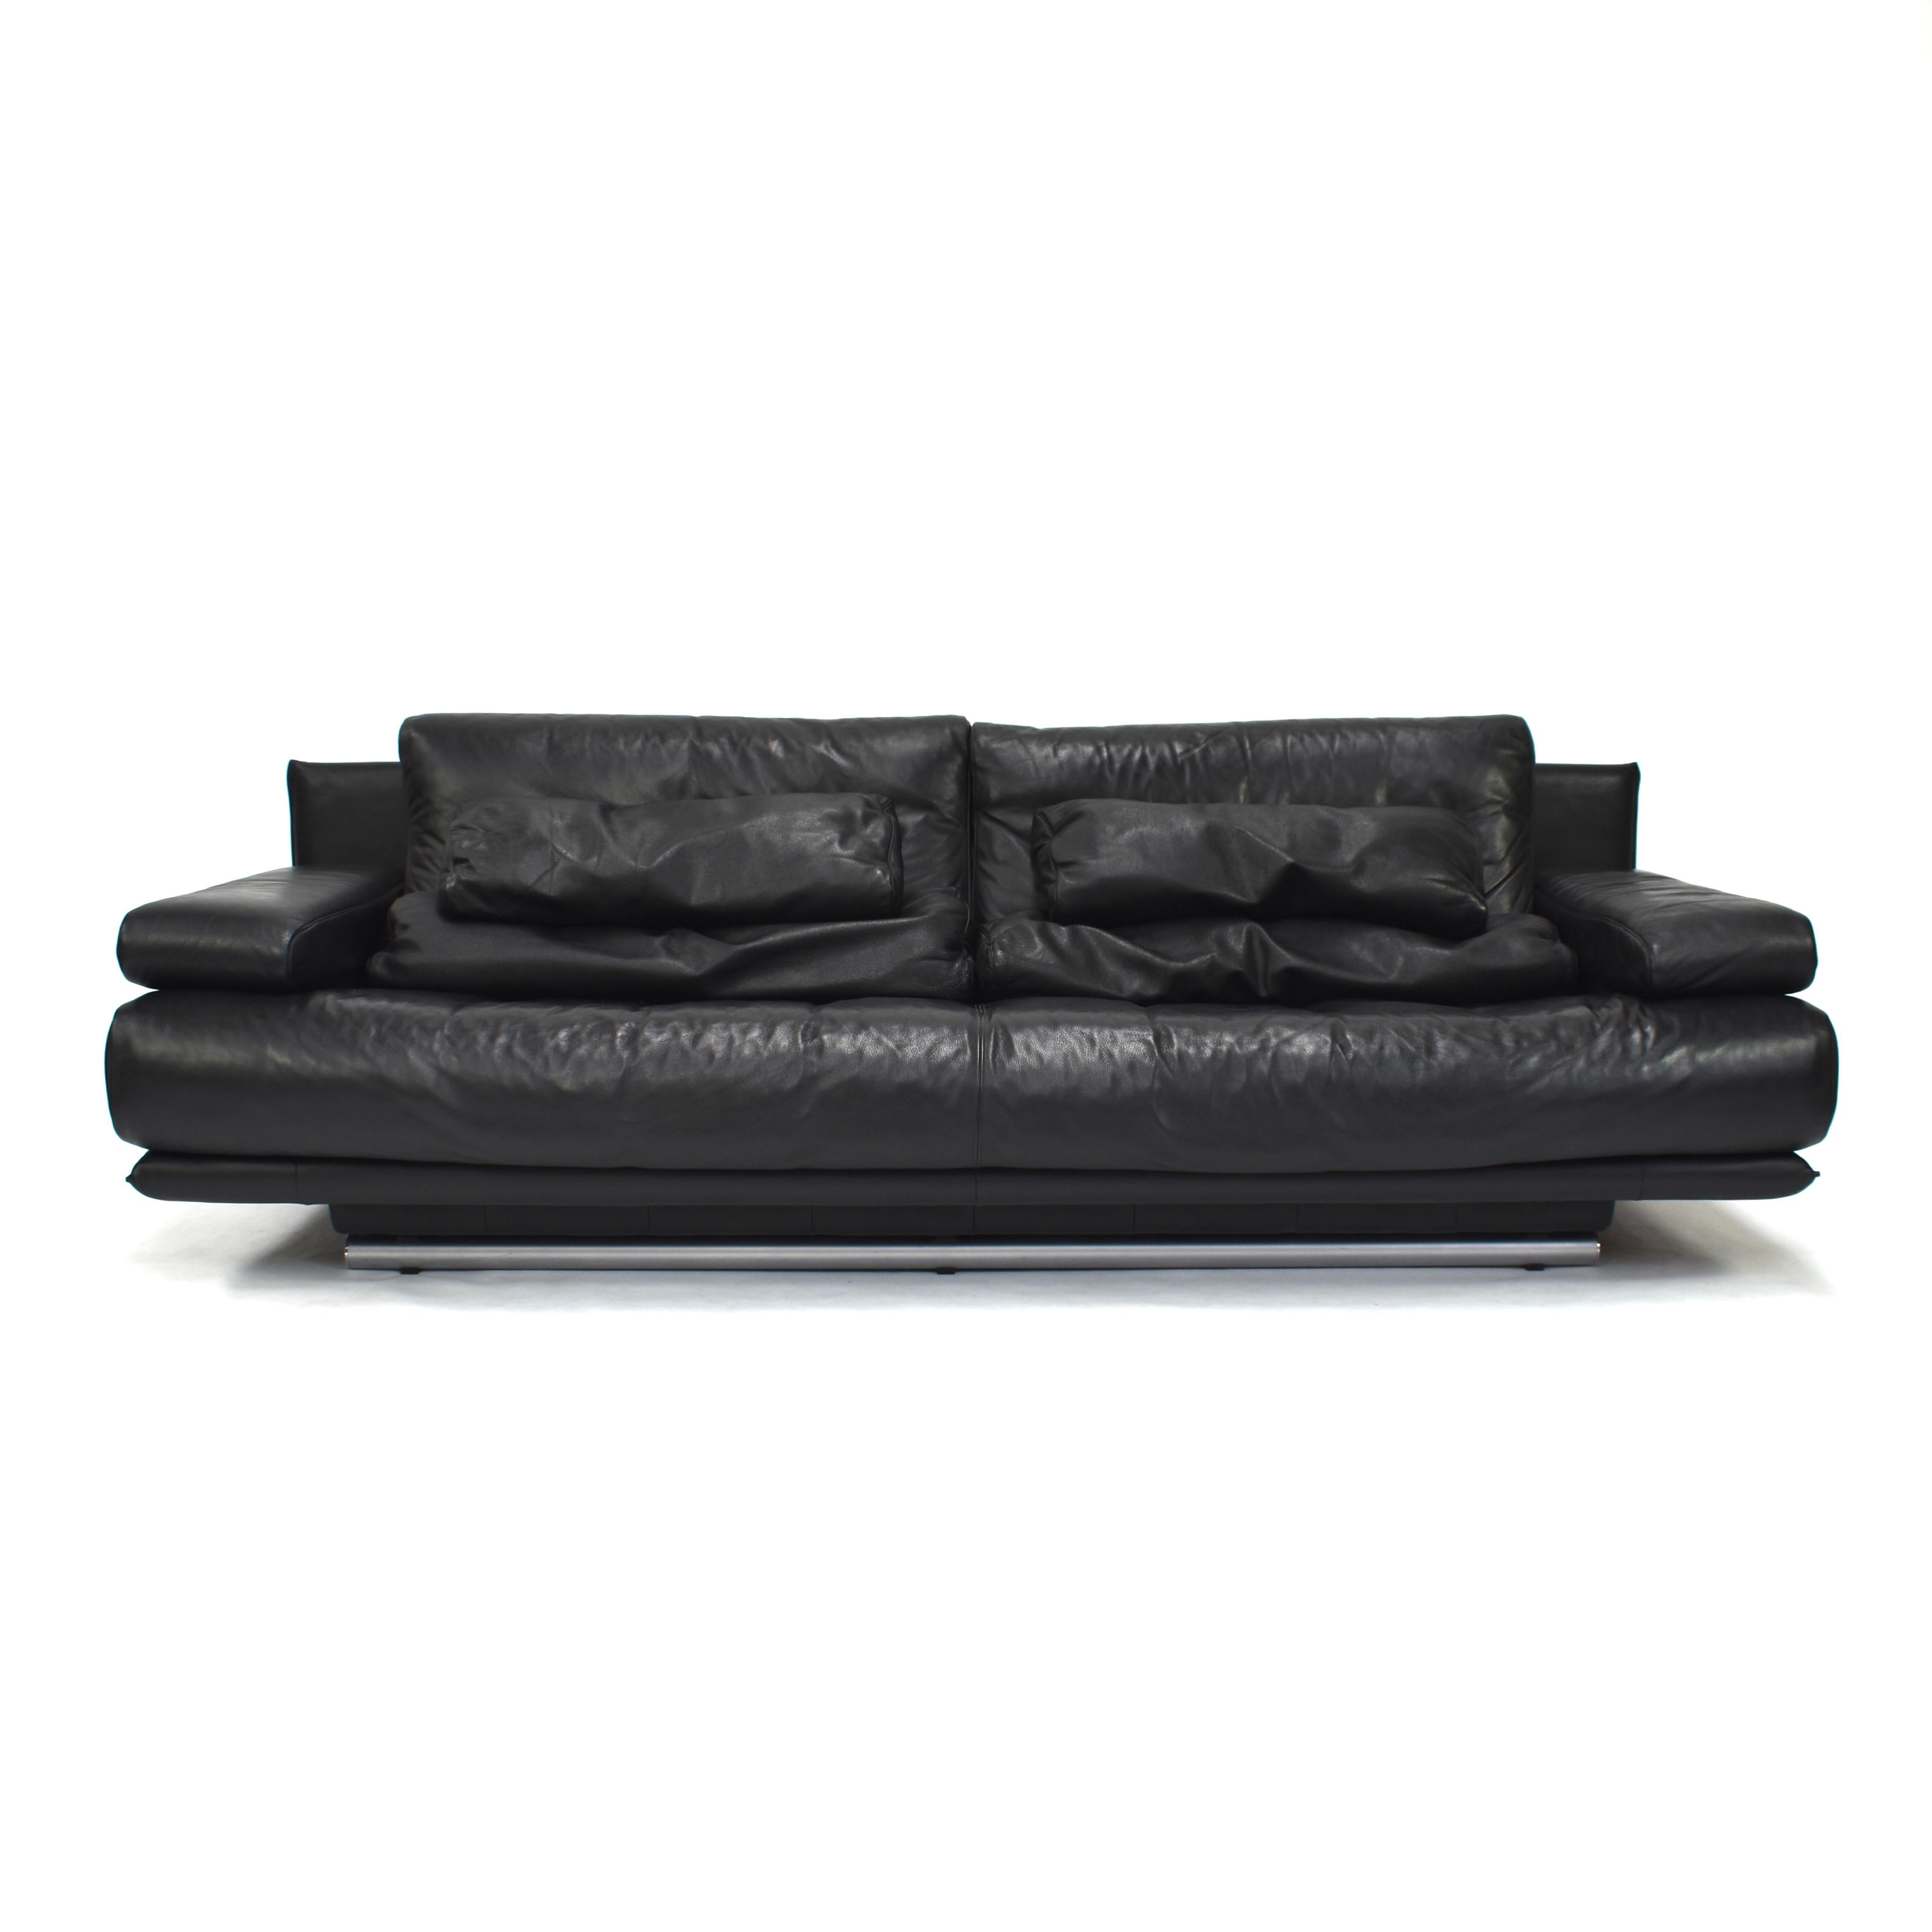 Aluminum Rolf Benz Model 6500 Sofa in Black Leather by Mathias Hoffmann